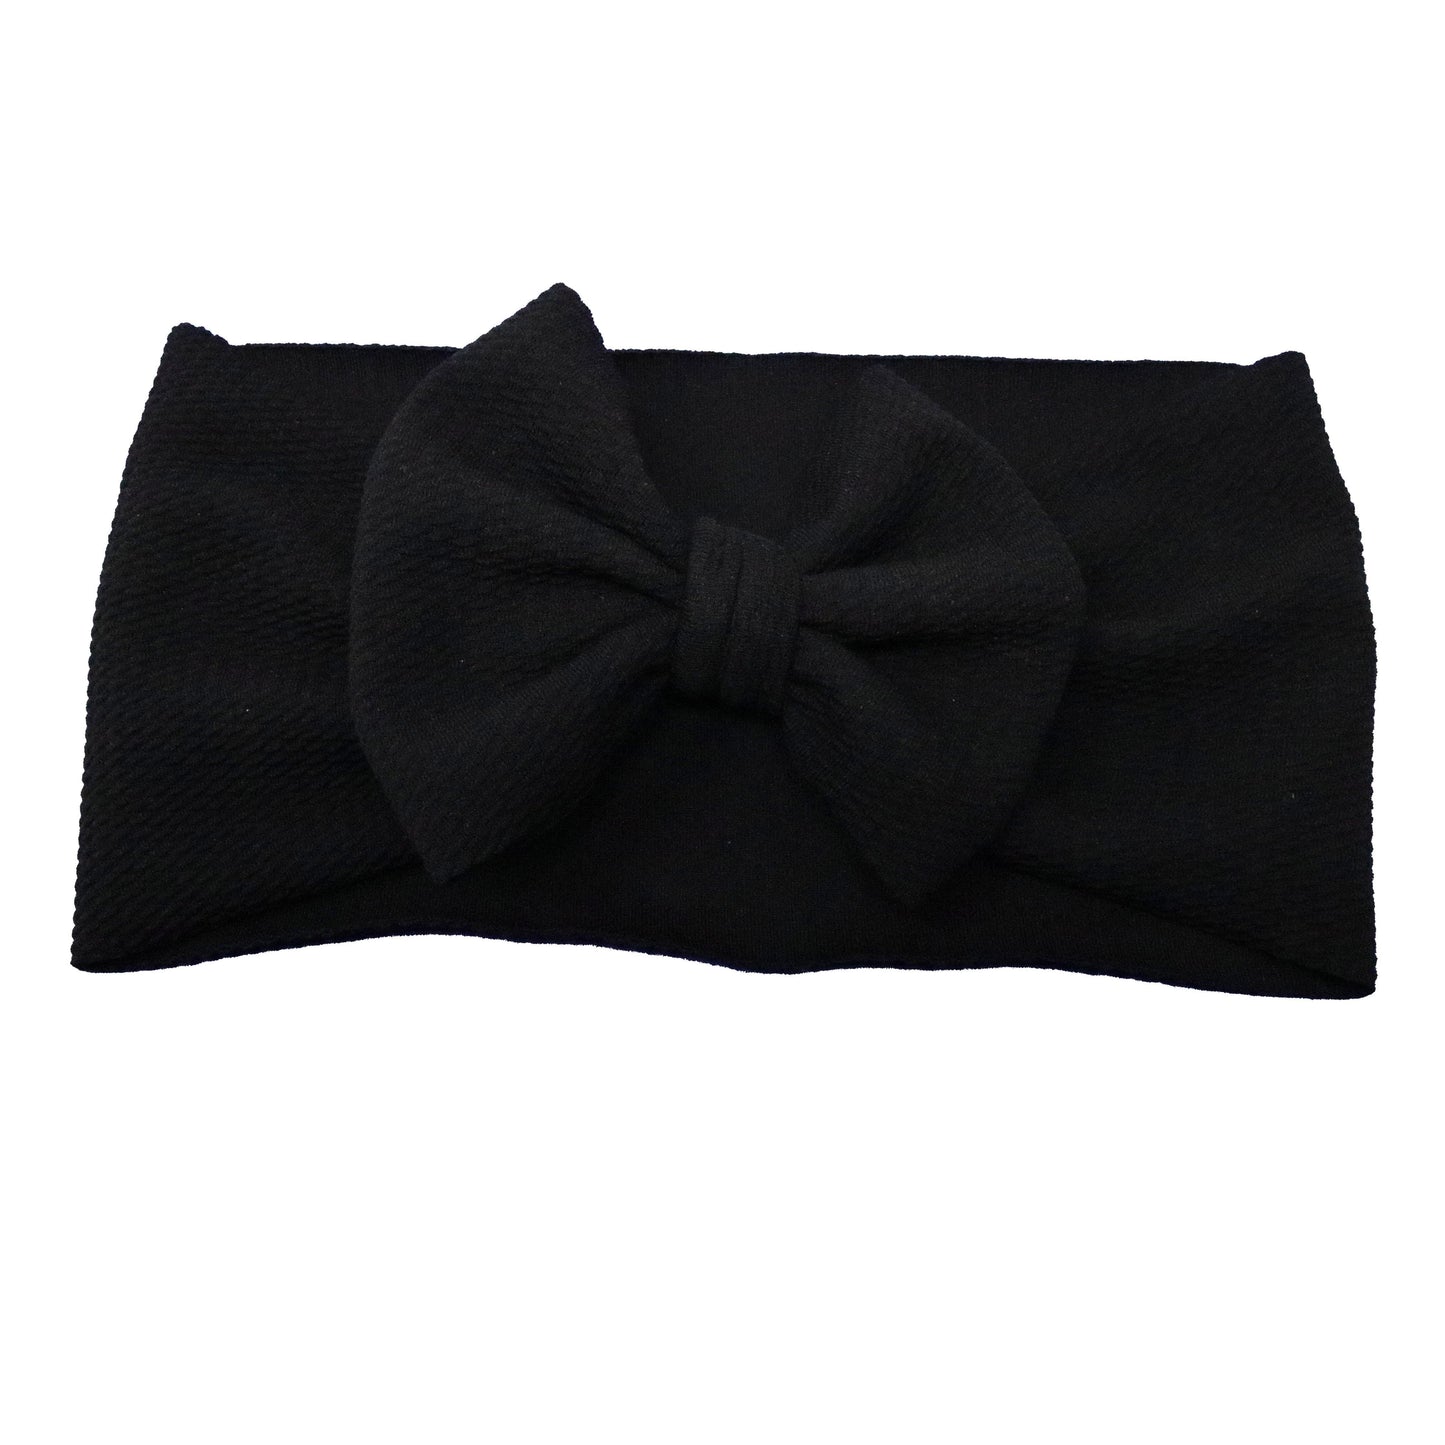 Black Fabric Headwrap